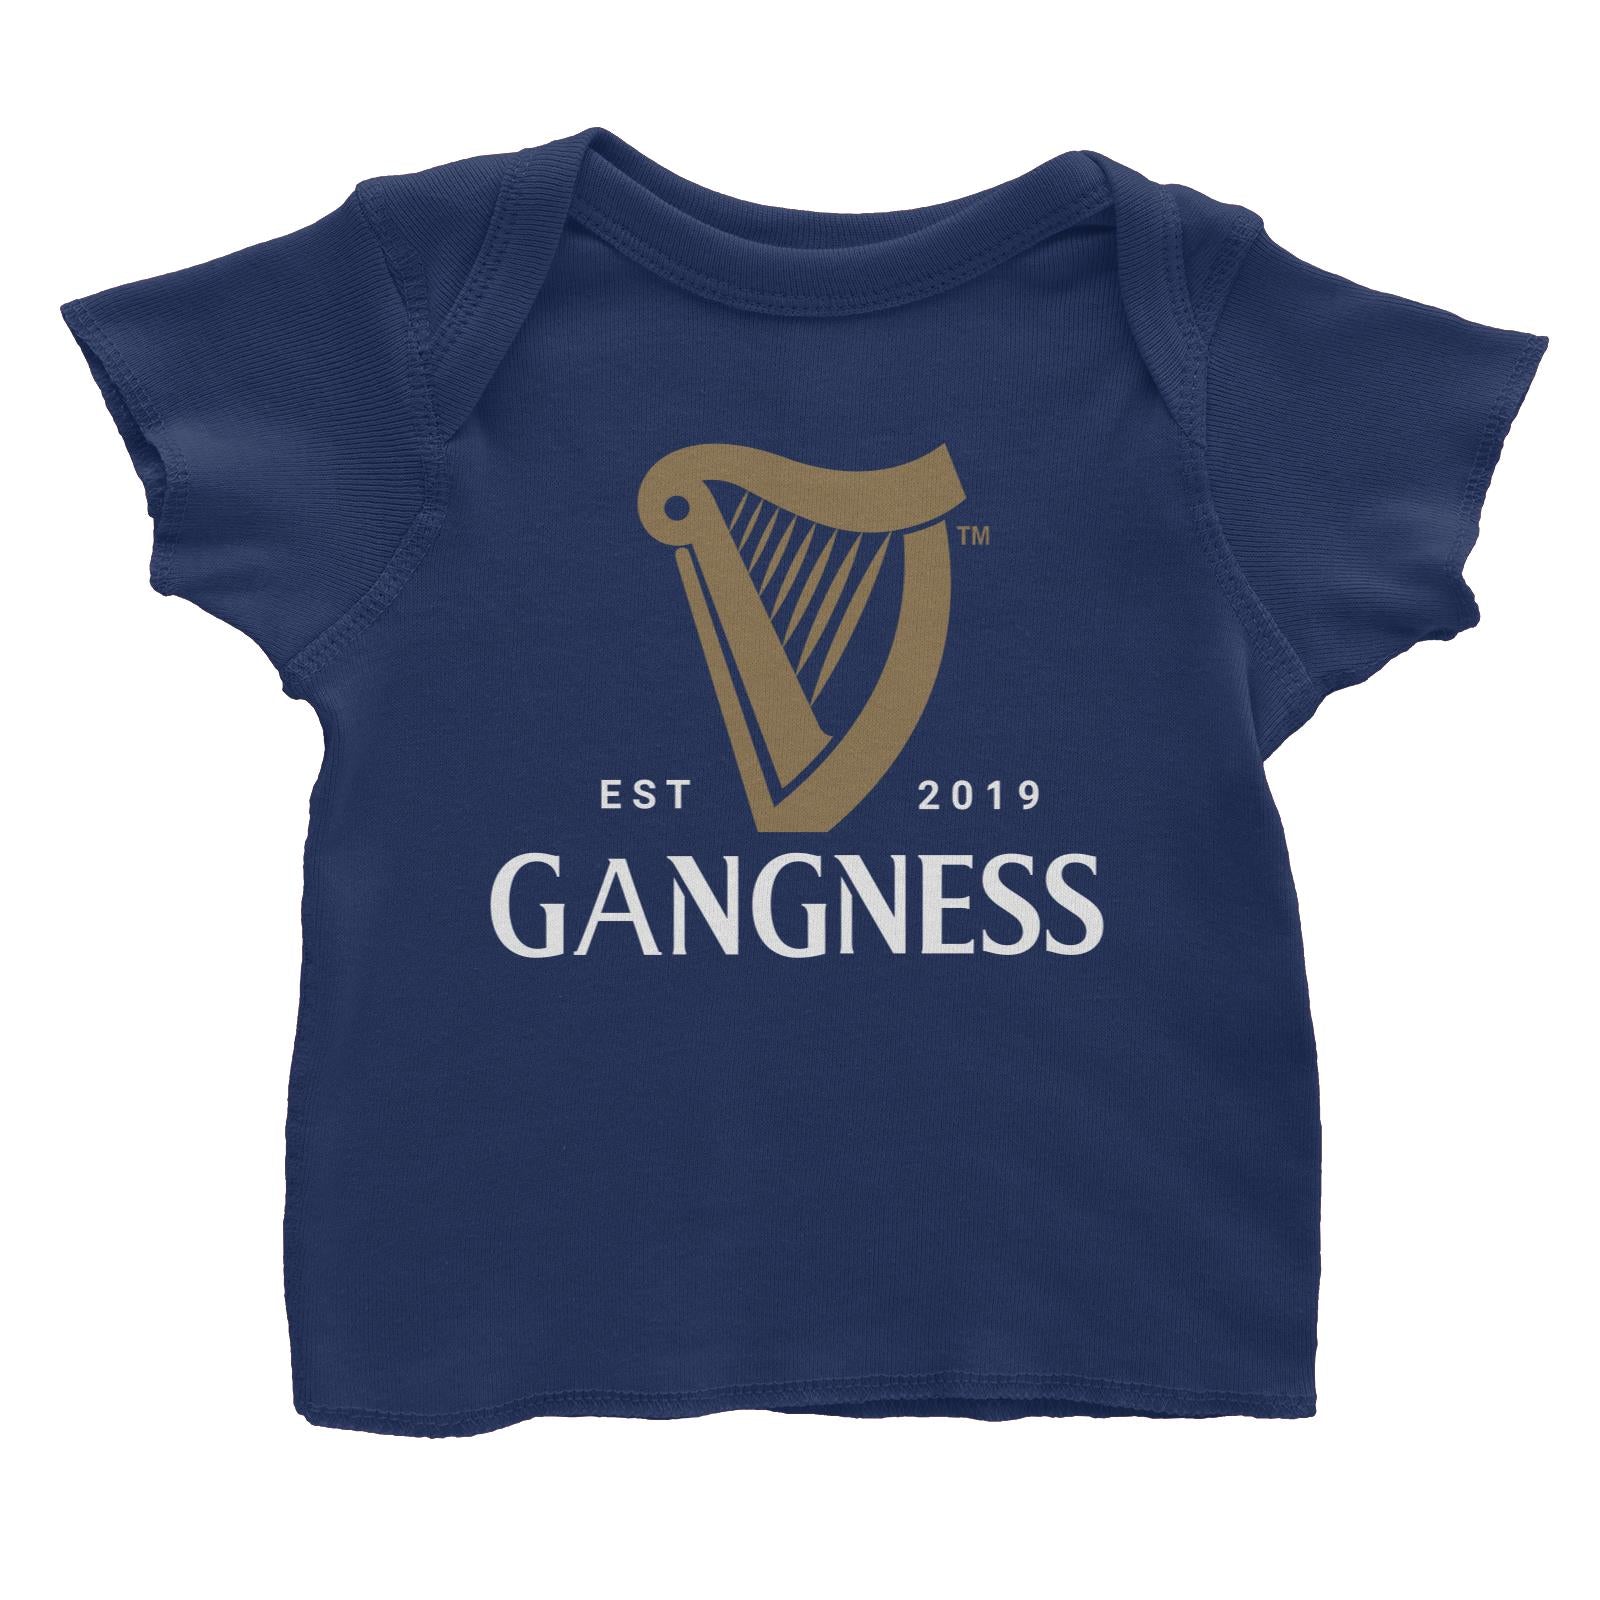 Slang Statement Gangness Baby T-Shirt